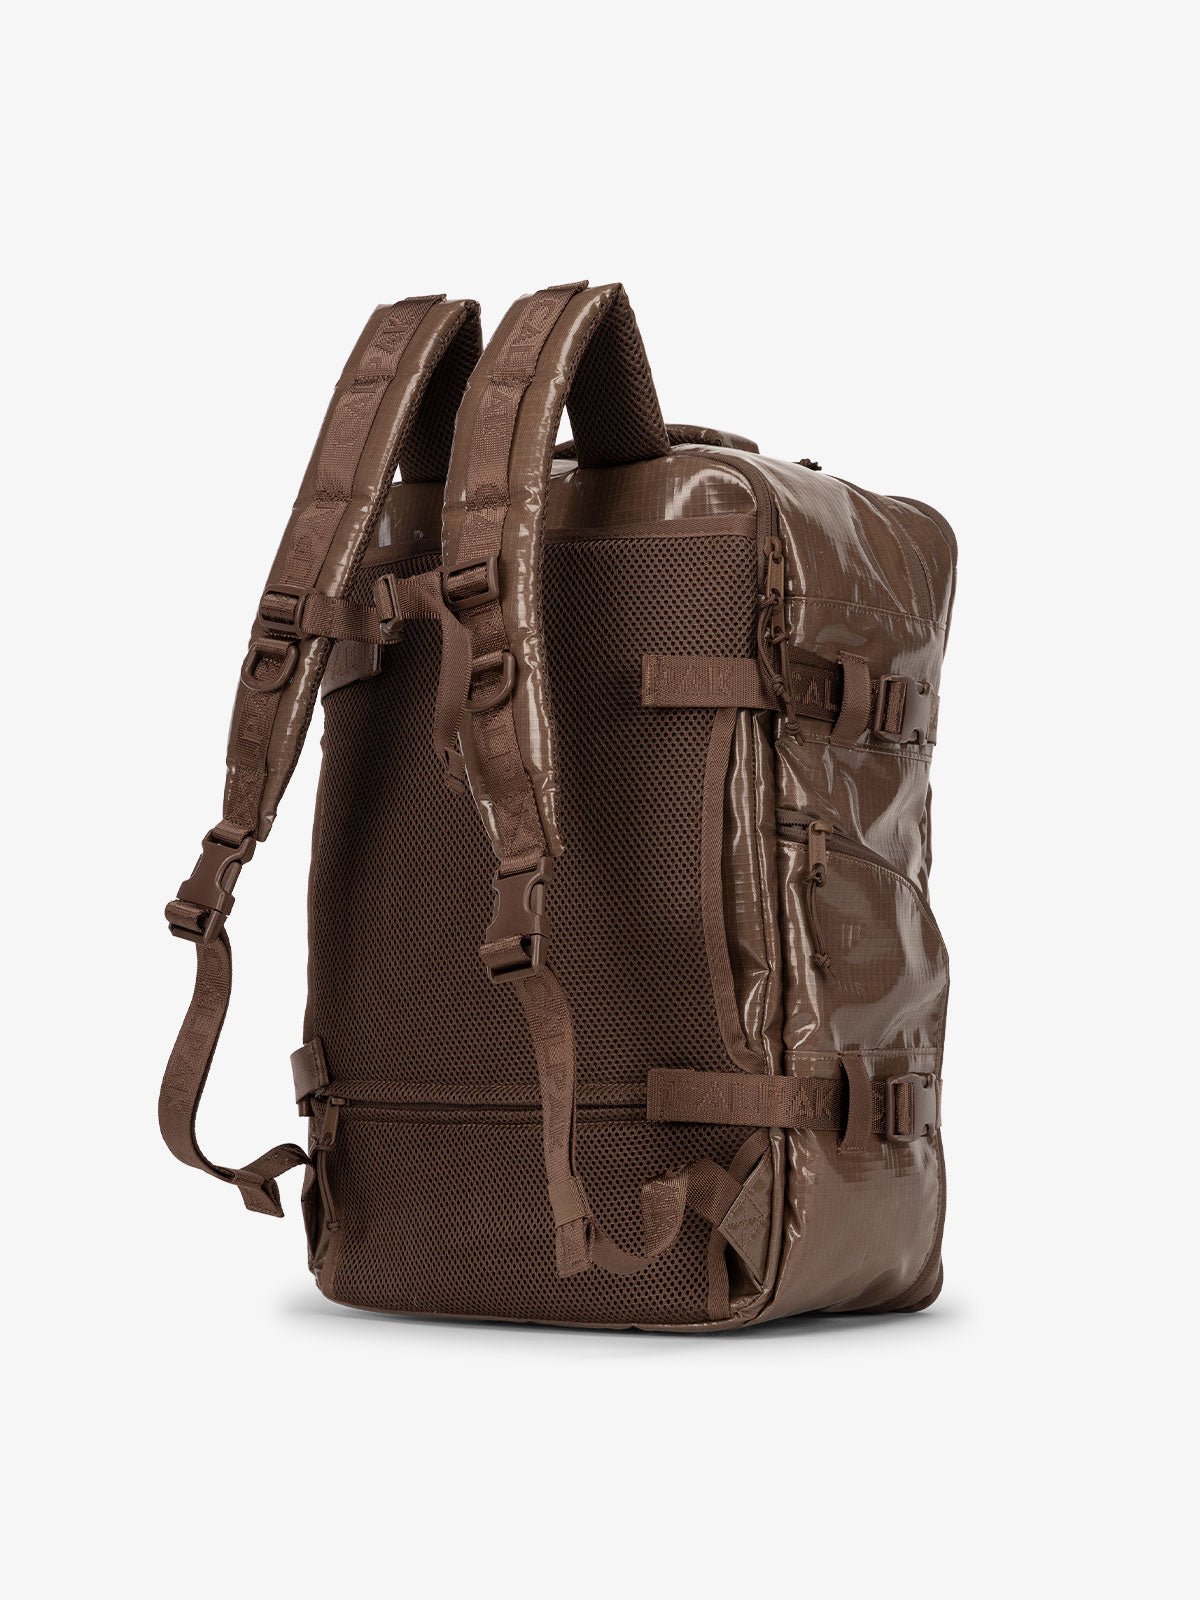 CALPAK Terra 26L Laptop Backpack Duffel with detachable adjustable shoulder strap in brown cacao